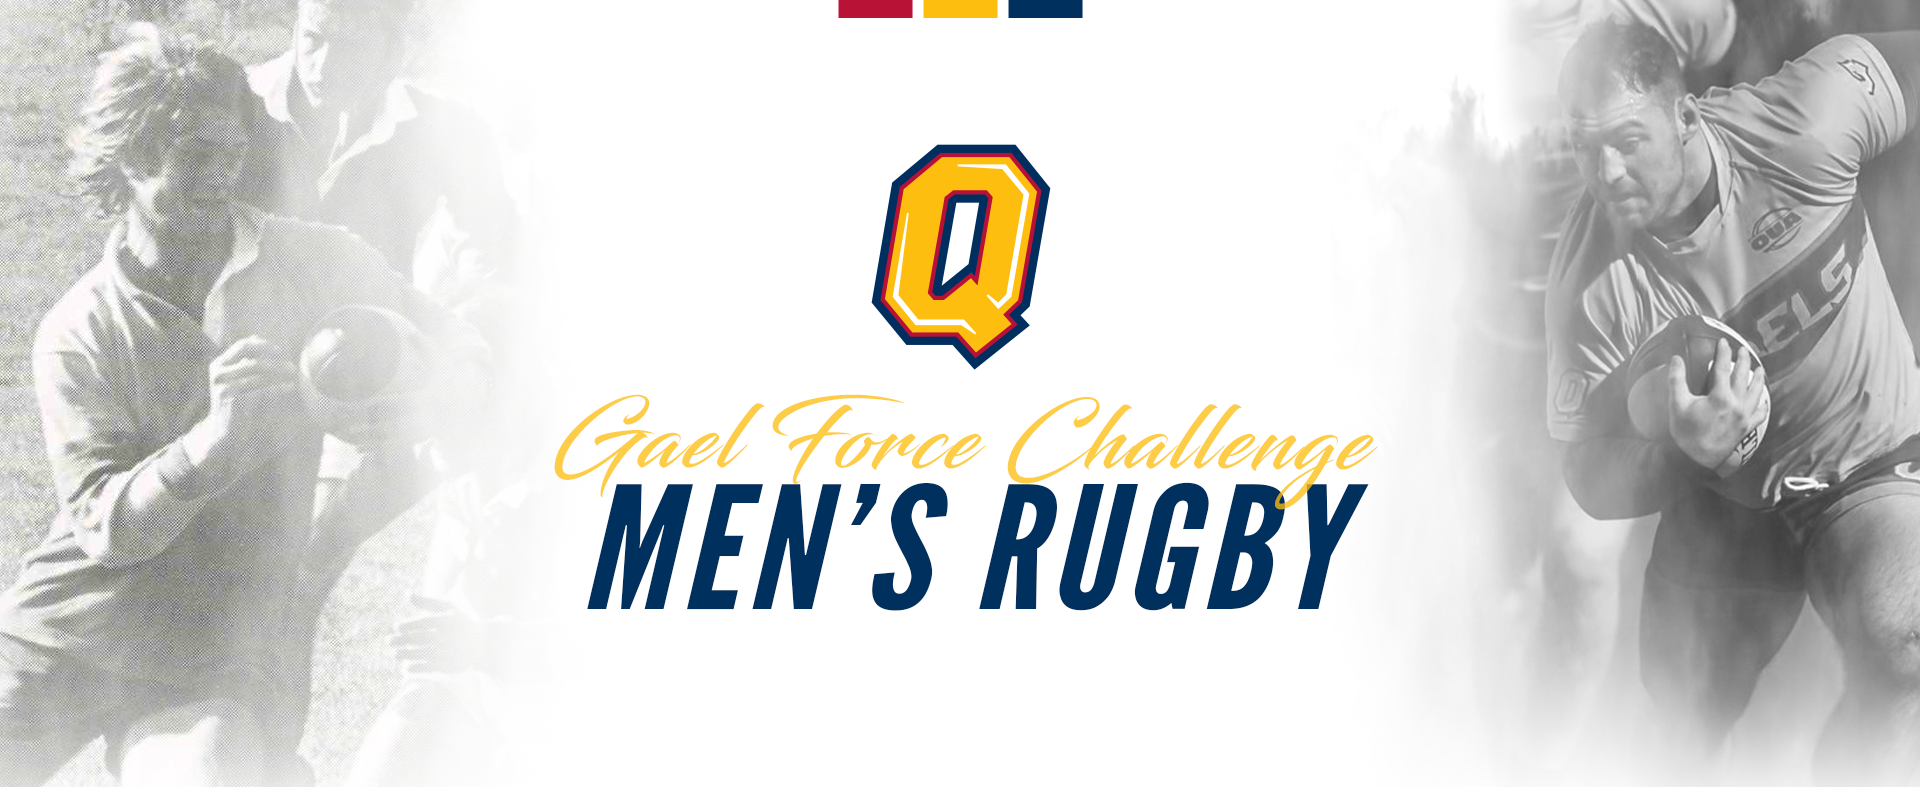 Rugby Men's -  Gael Force Challenge. image